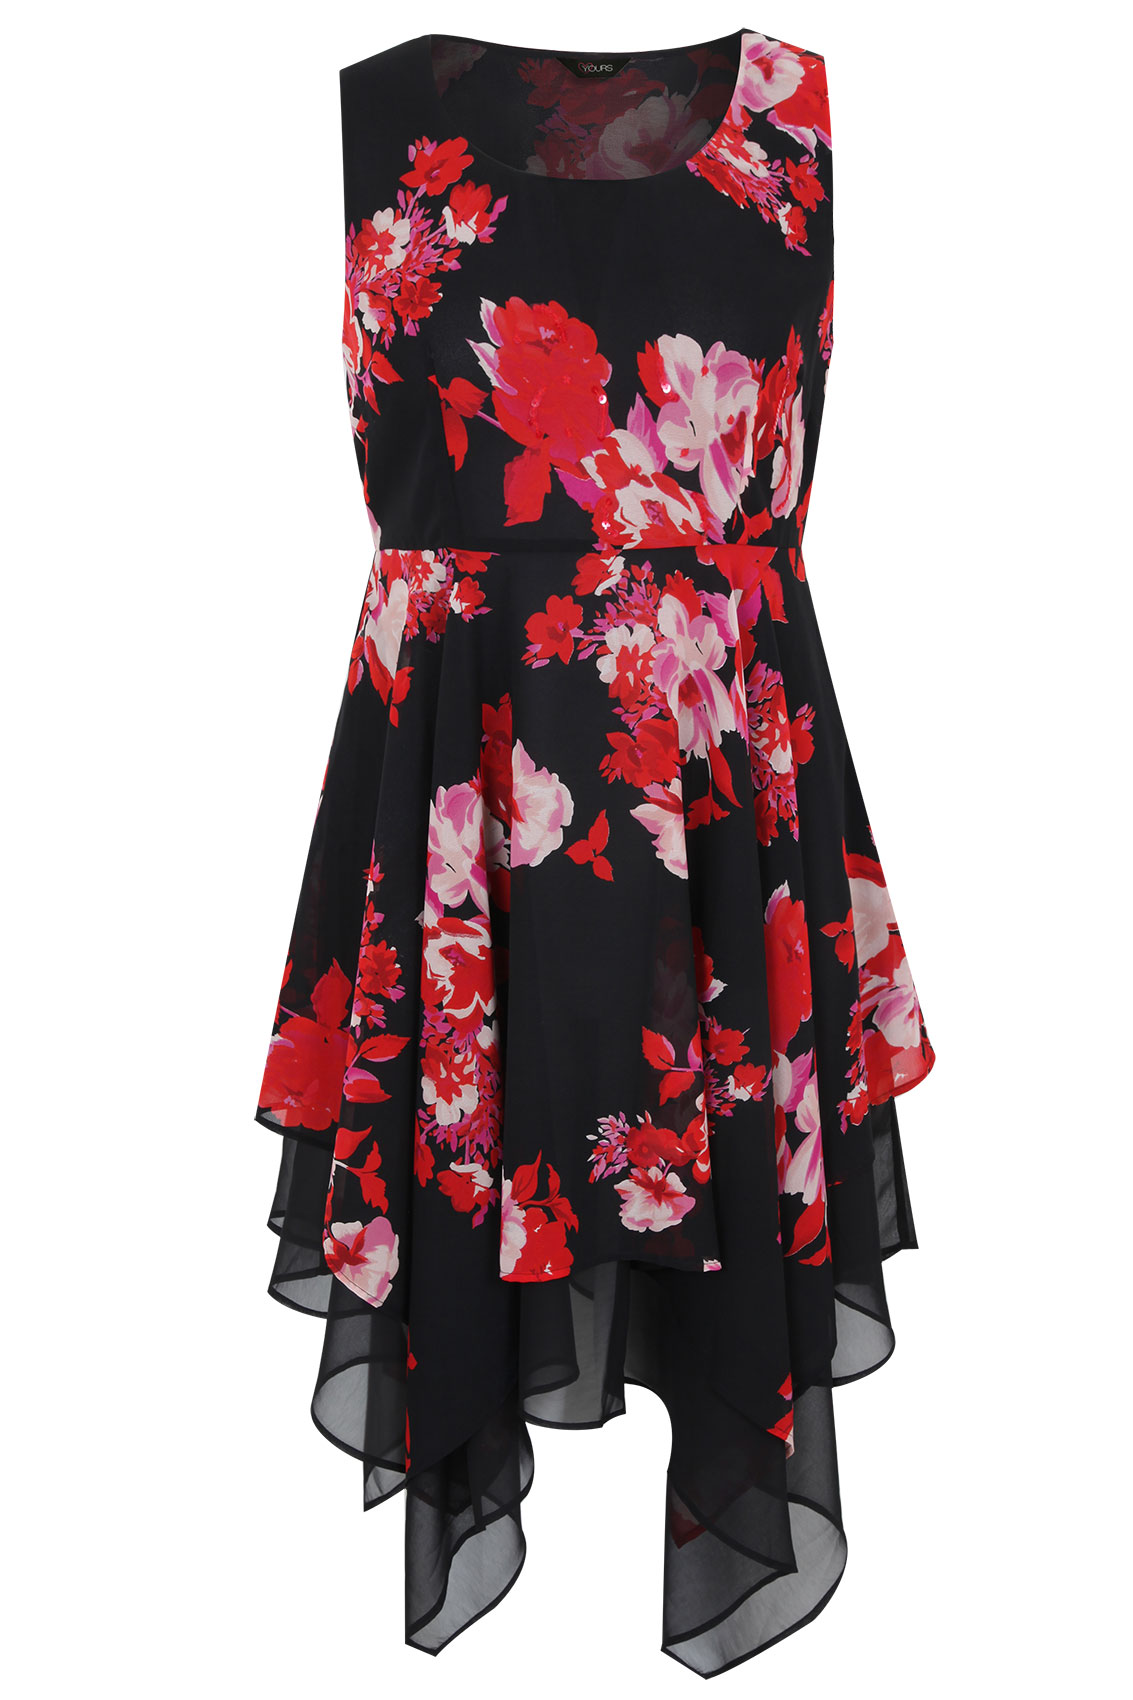 Black And Red Multi Sleeveless Floral Print Hanky Hem Dress Plus Size 